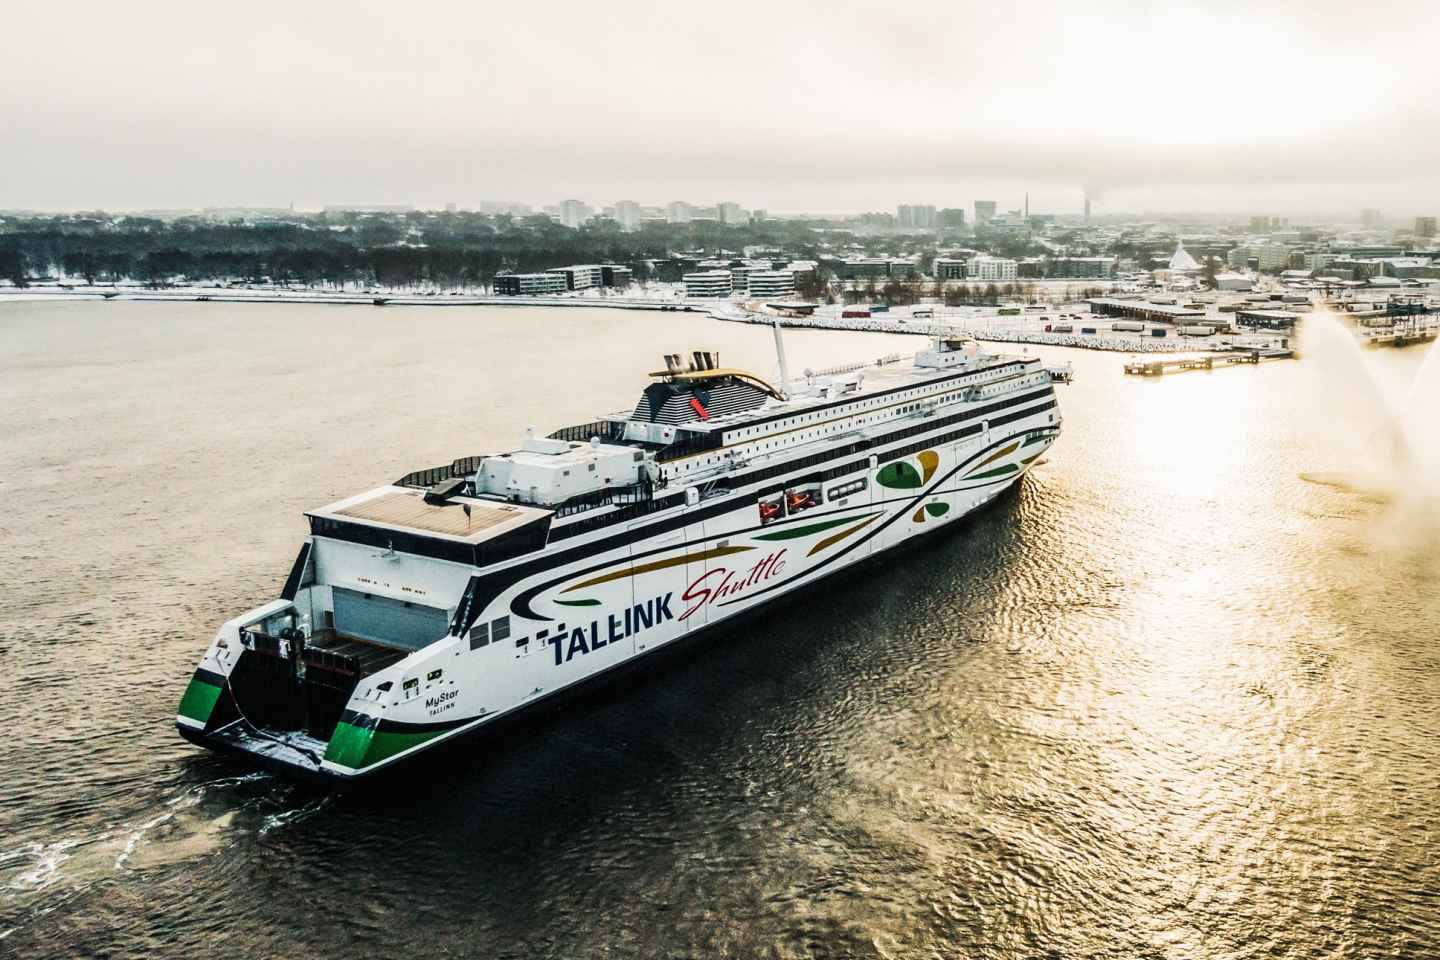 From Helsinki: Return Day Trip Ferry Ticket to Tallinn